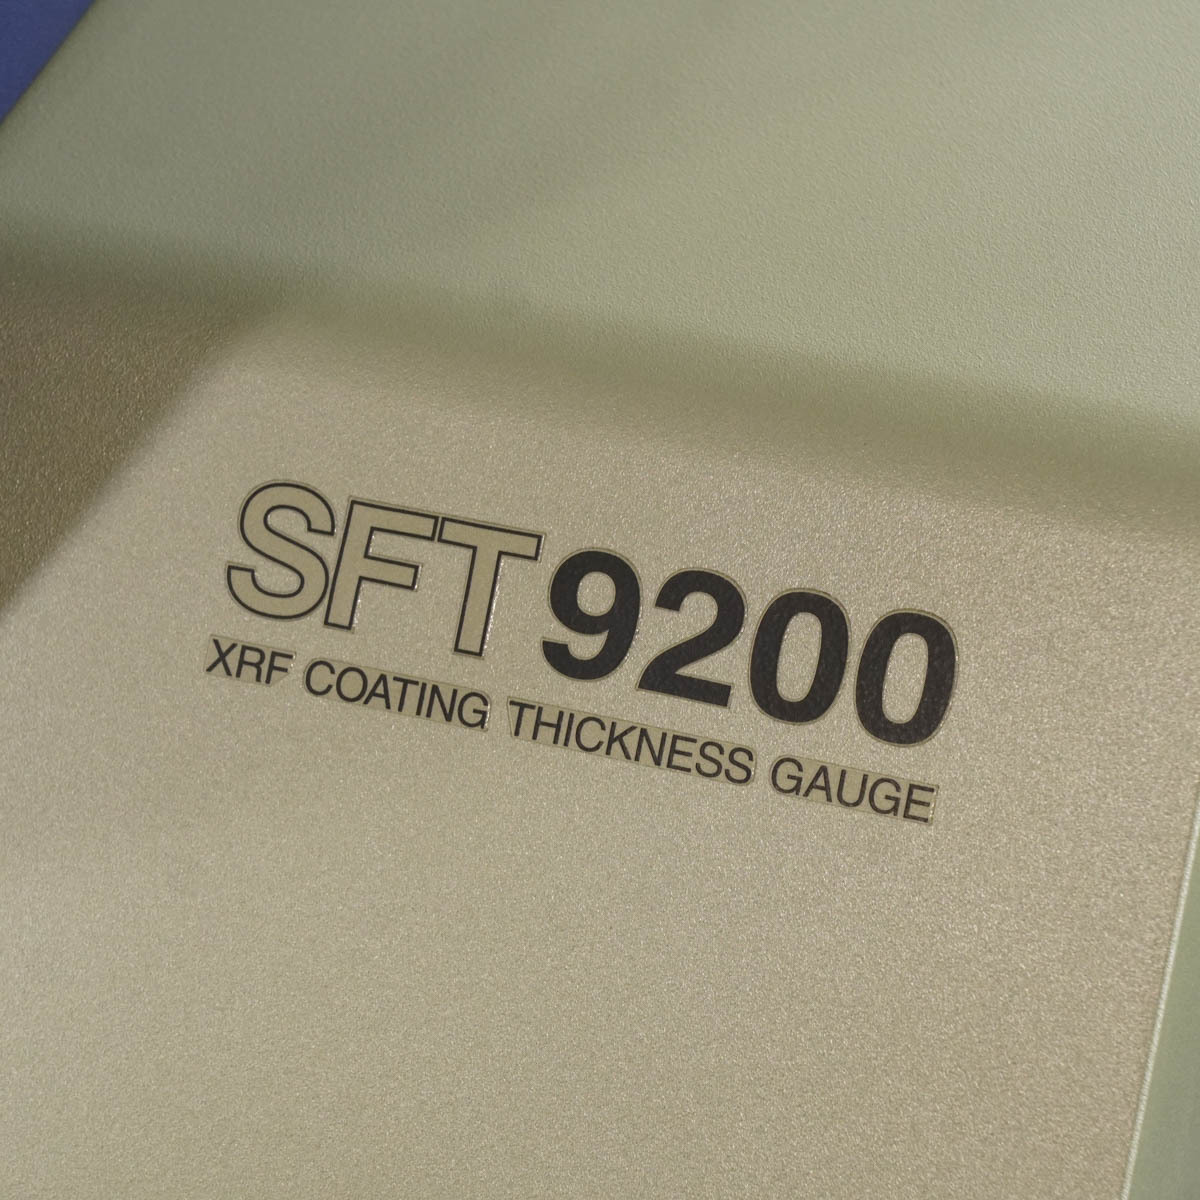 [DW] 8日保証 SFT9200 SII SEP-8200 セイコーインスツル XRF COATING THICKNESS GAUGE 蛍光X線膜厚計 蛍光X線分析装置 電源...[05787-0001]_画像3